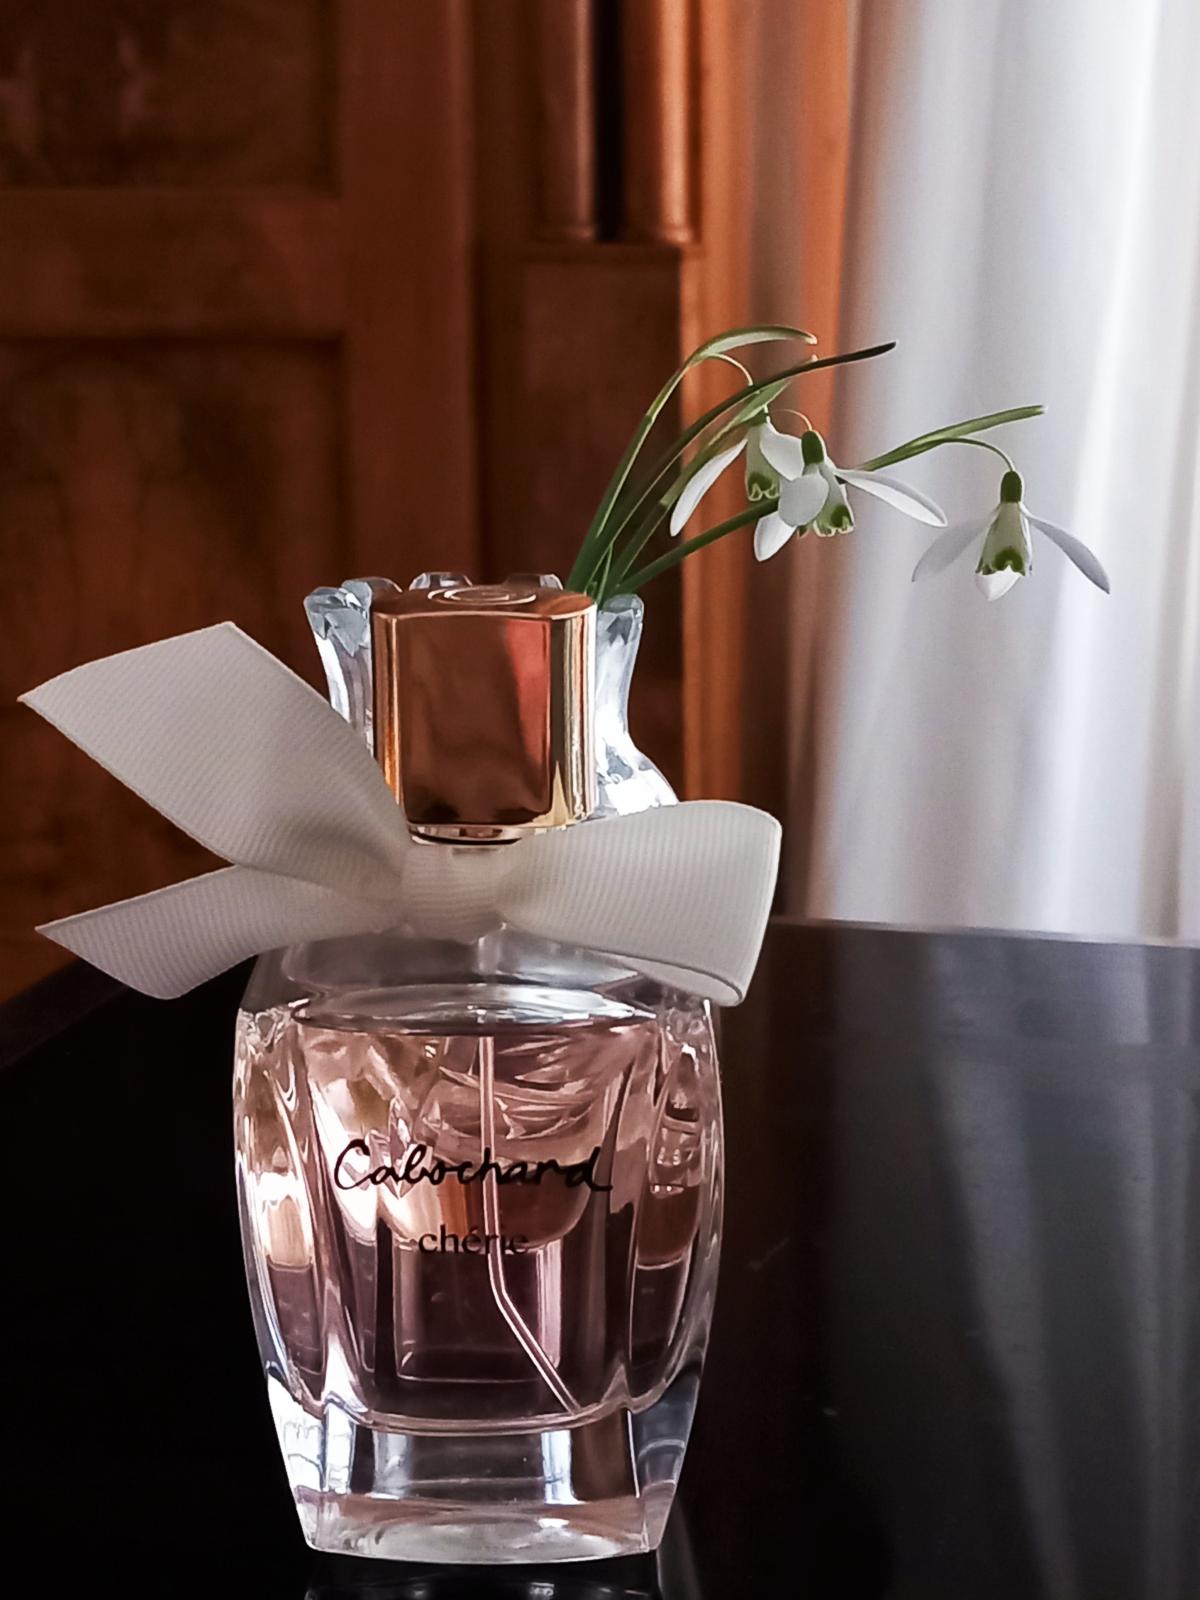 Cabochard Chérie Grès perfume - a fragrance for women 2019